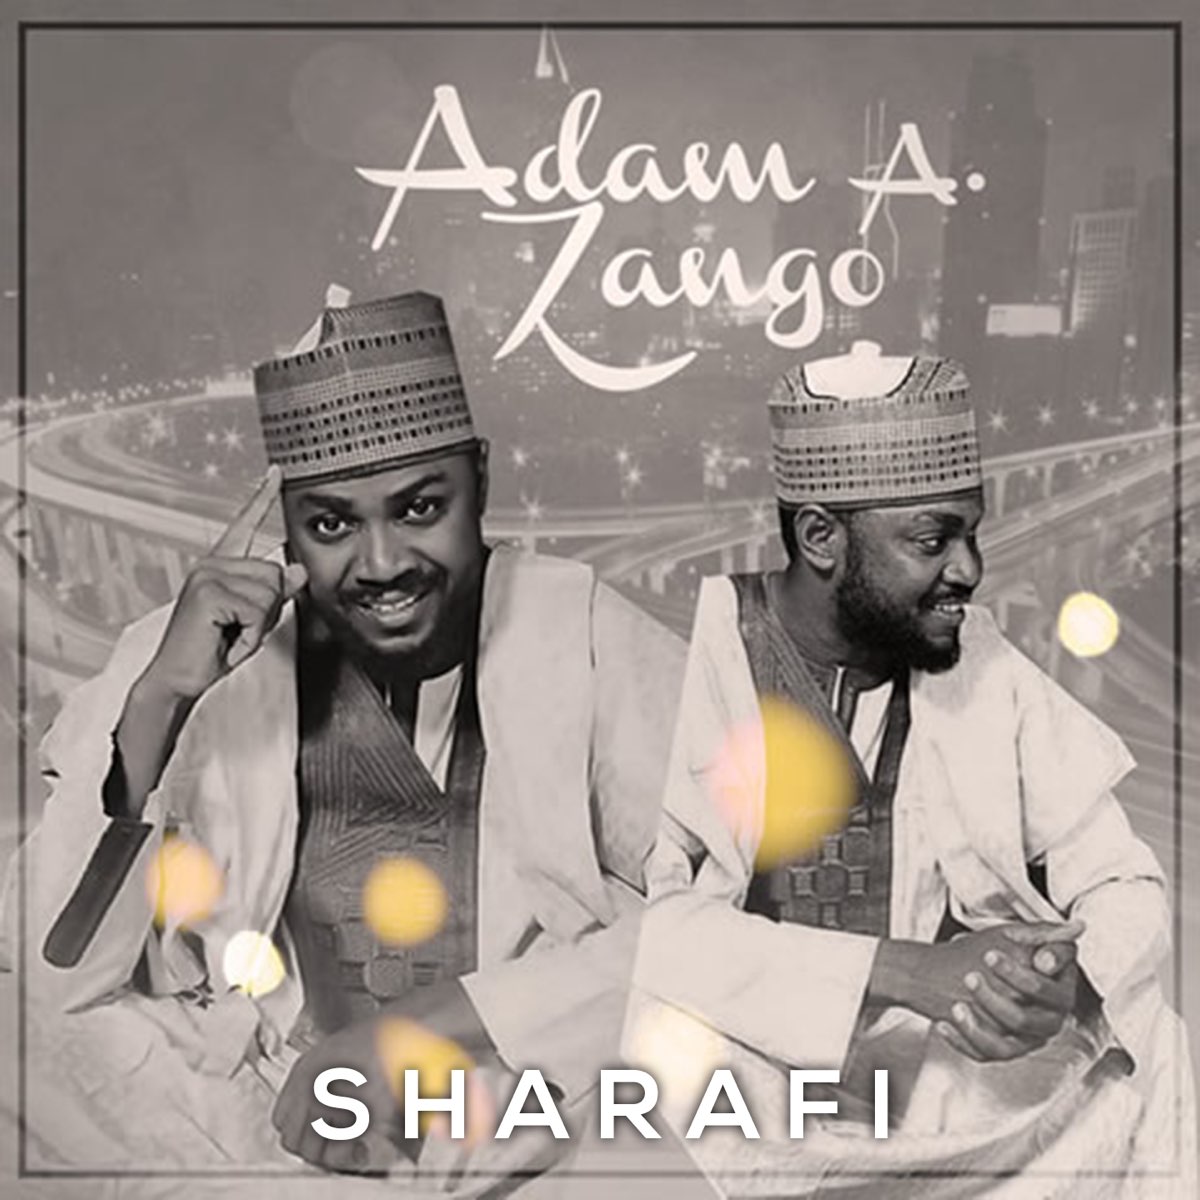 Sharafi by Adam. A. Zango on Apple Music